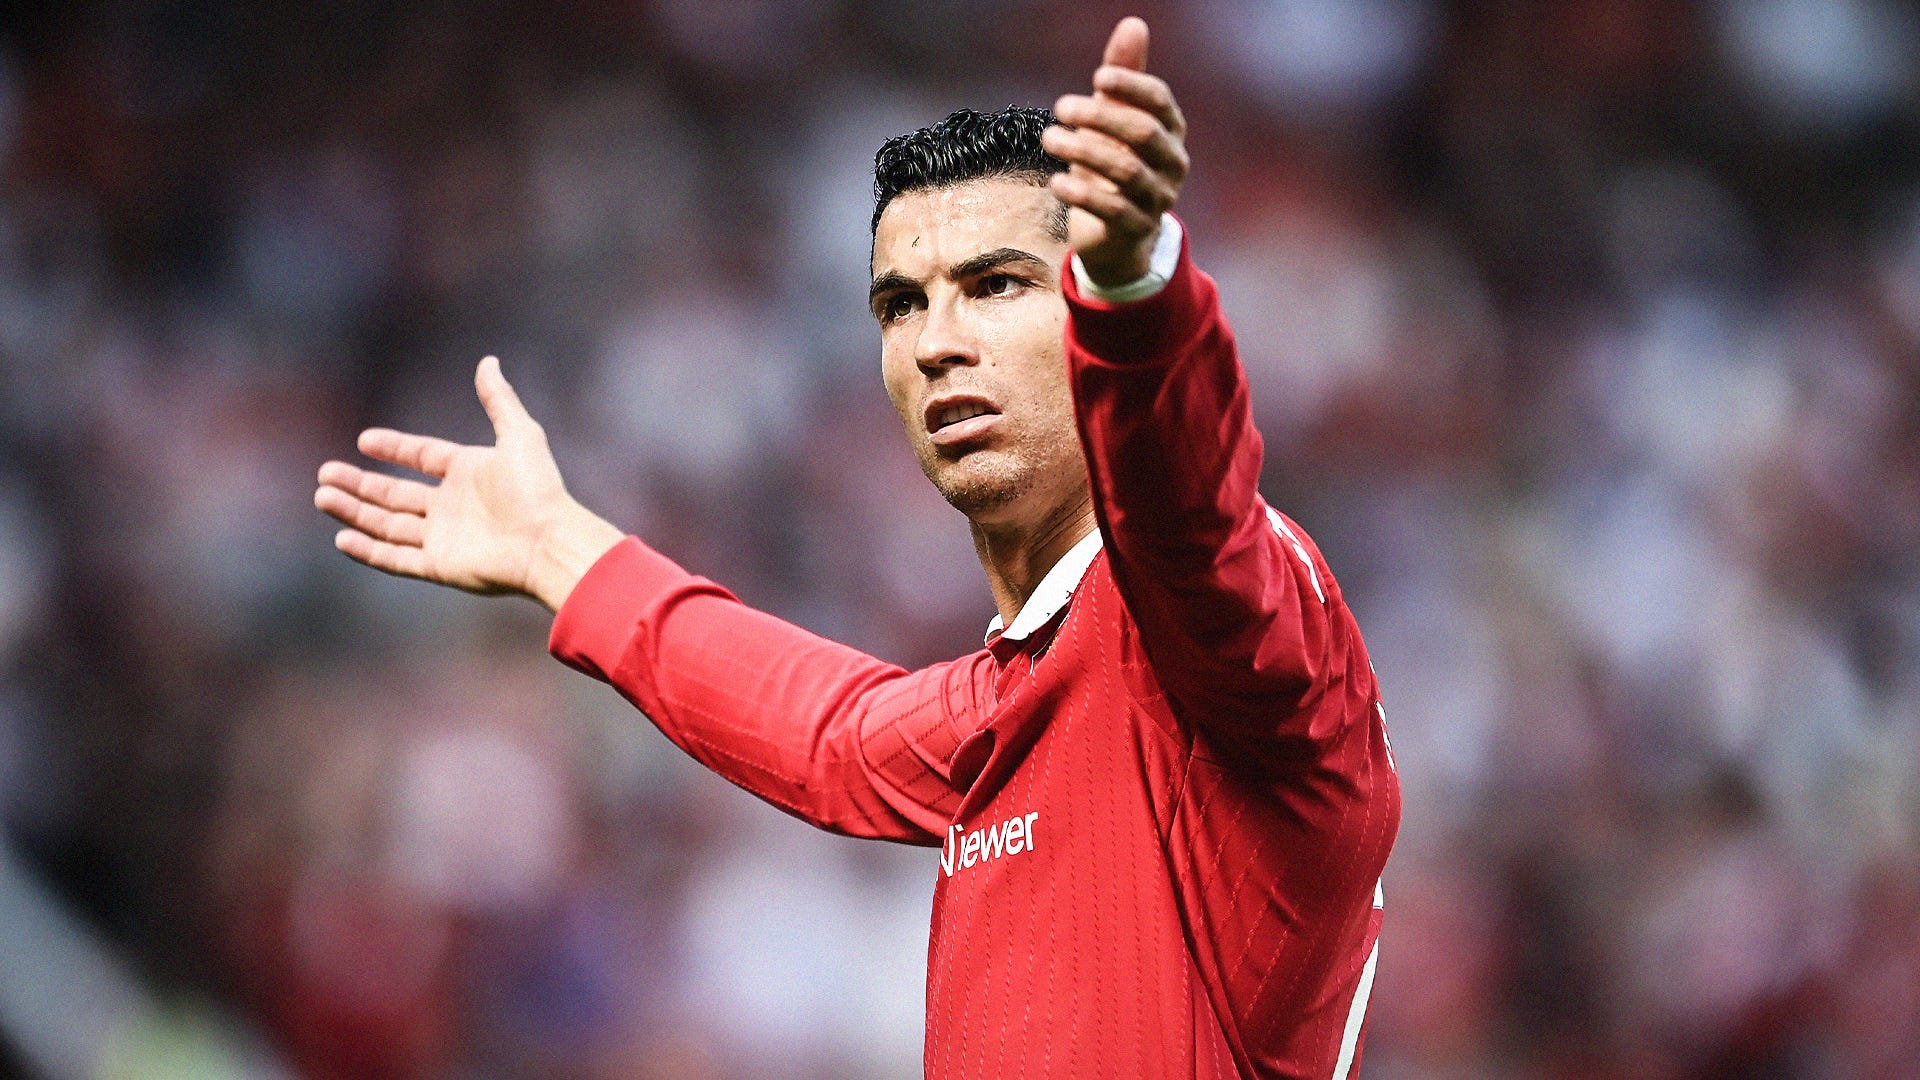 Cristiano Ronaldo Man Utd 2022-23 HIC 16:9